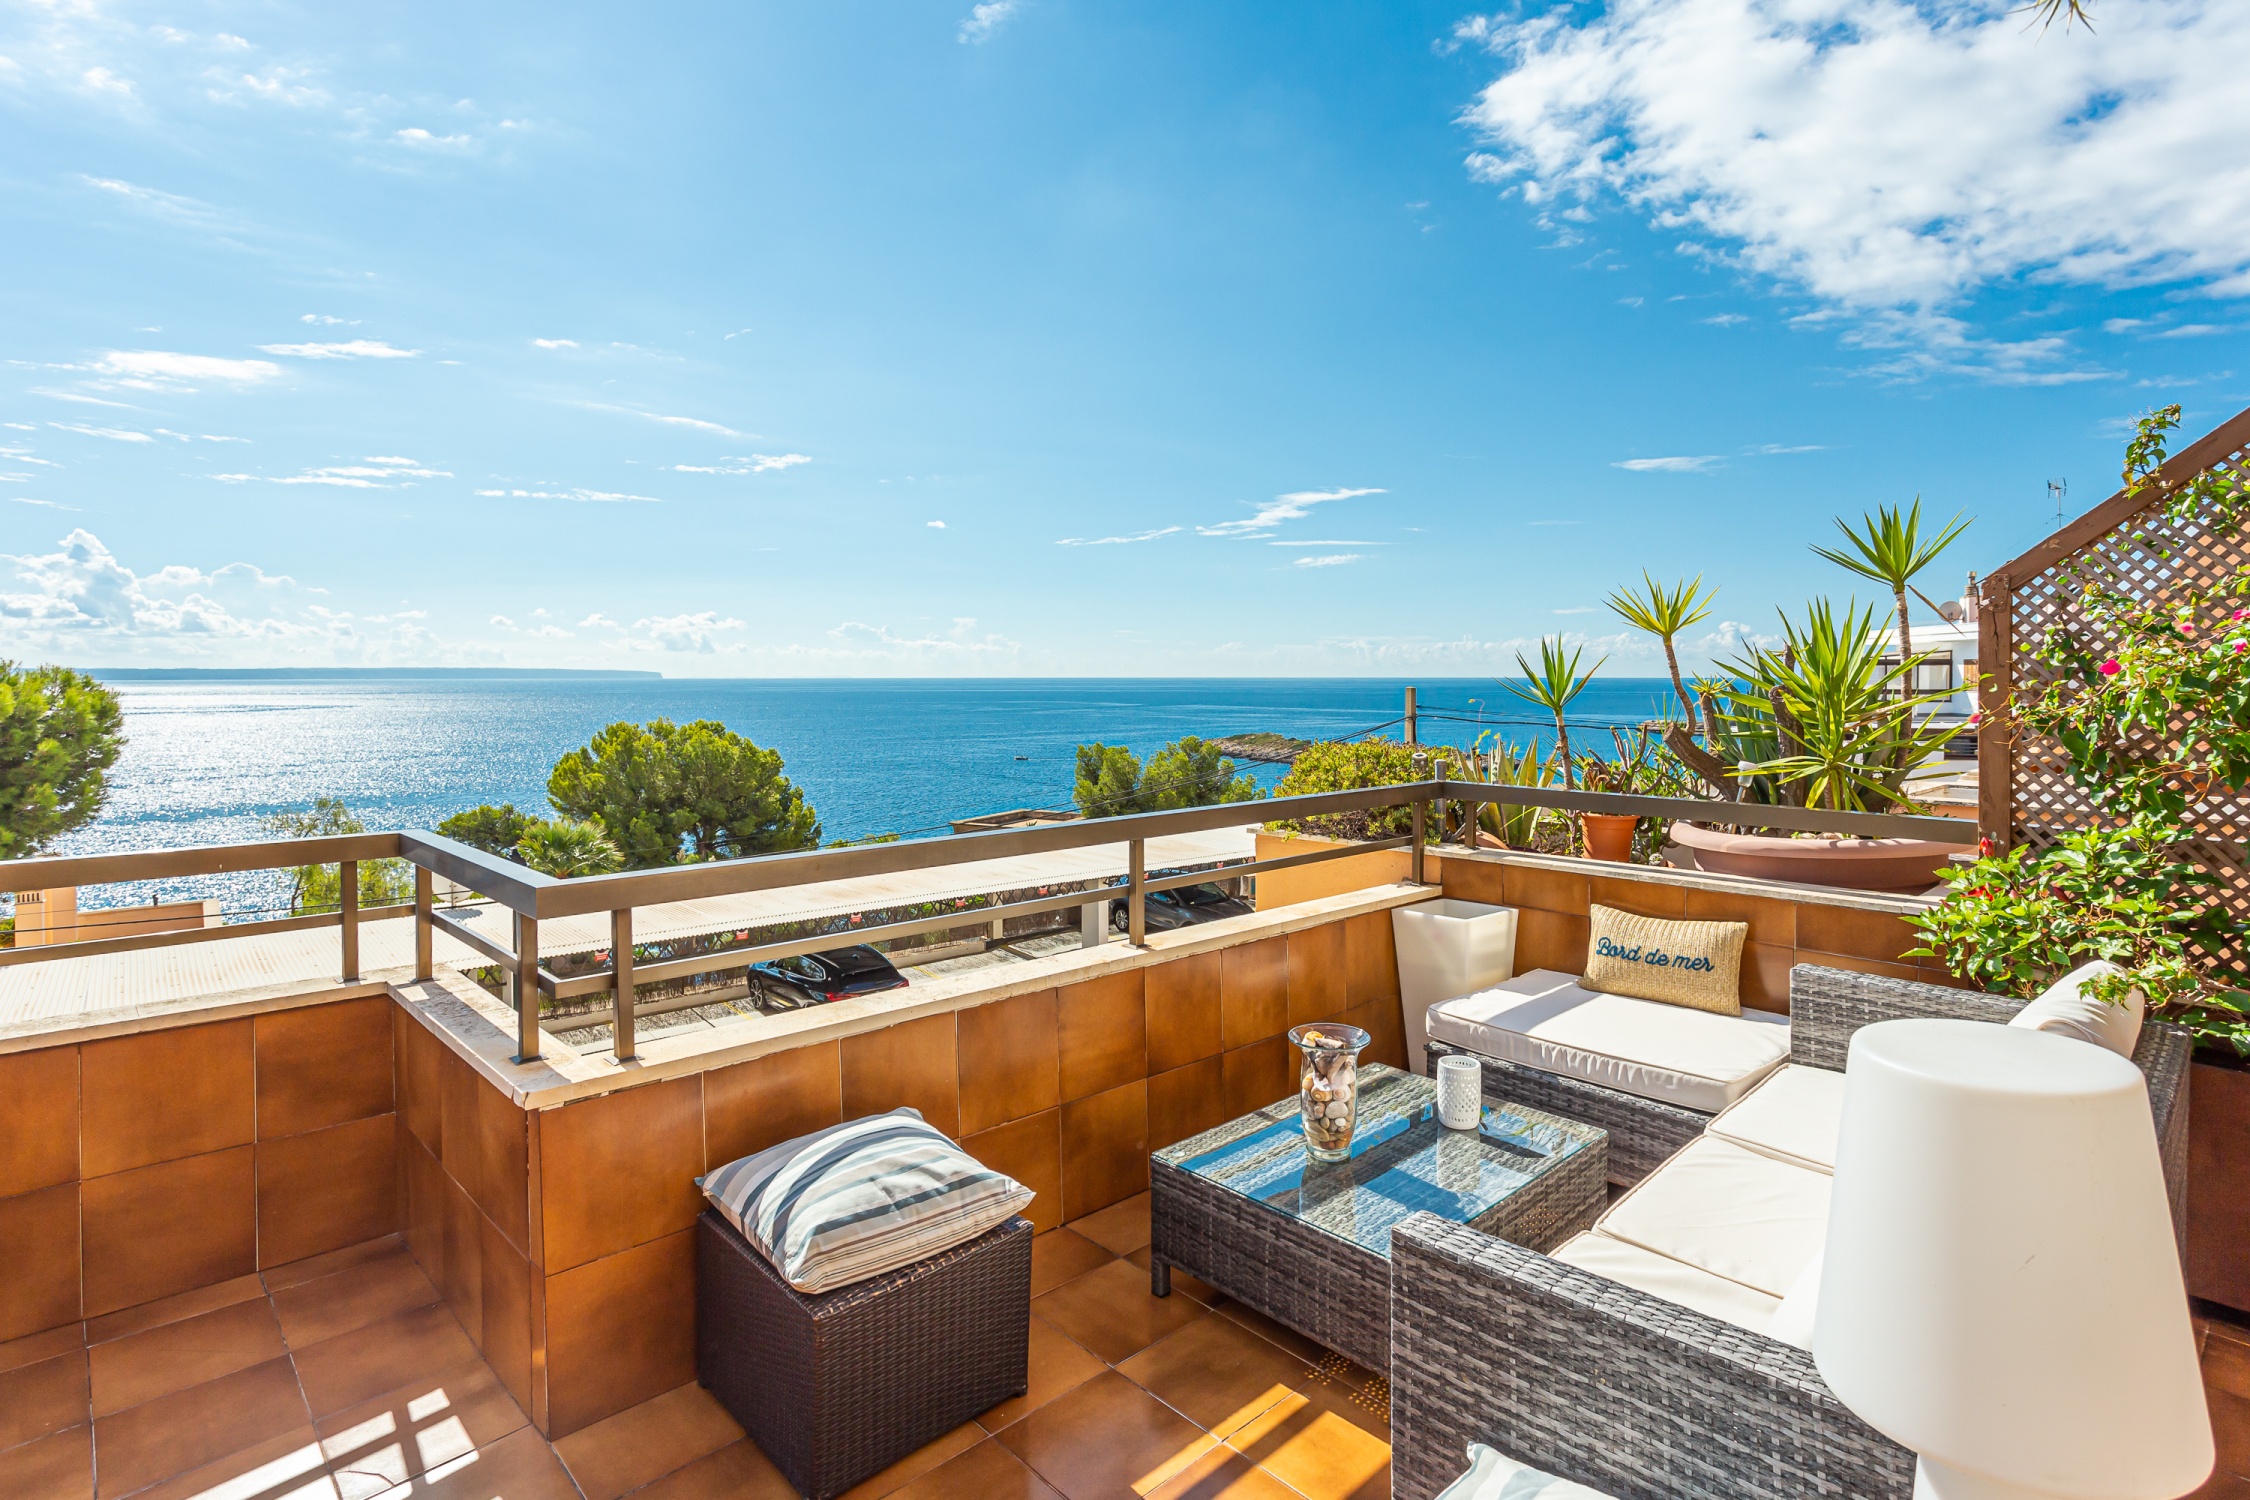 Illetes: 2 beds 1 bath sea views, large terrace, parking, pool